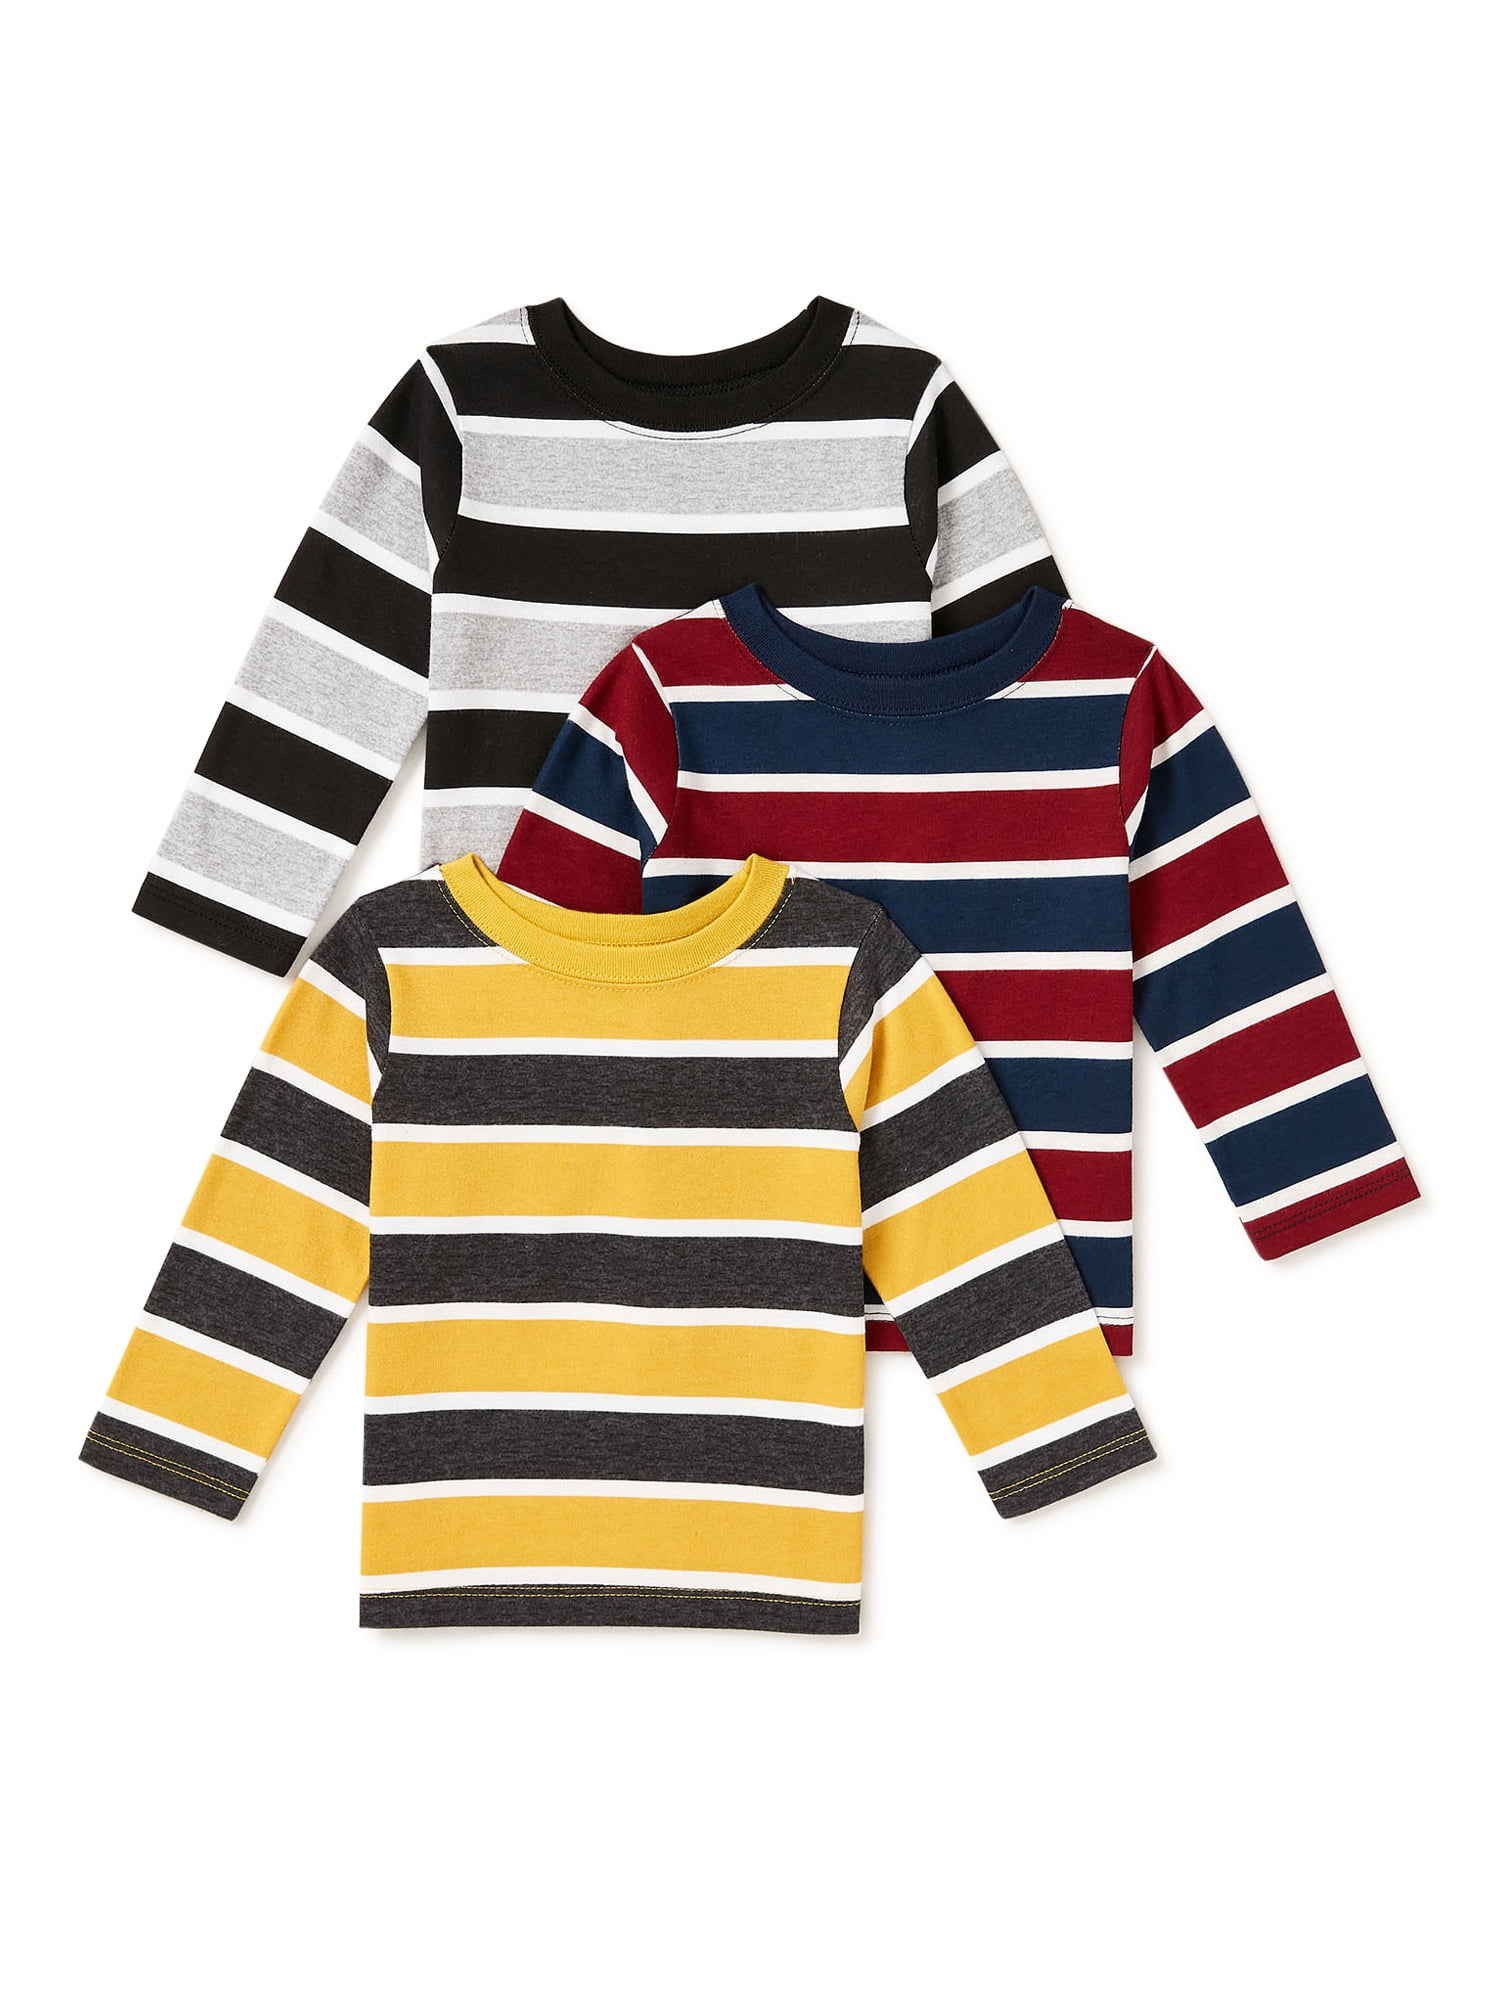 Garanimals Baby Boy Long Sleeve T-Shirt Multipack Set, 3-Piece, Sizes  0/3M-24M